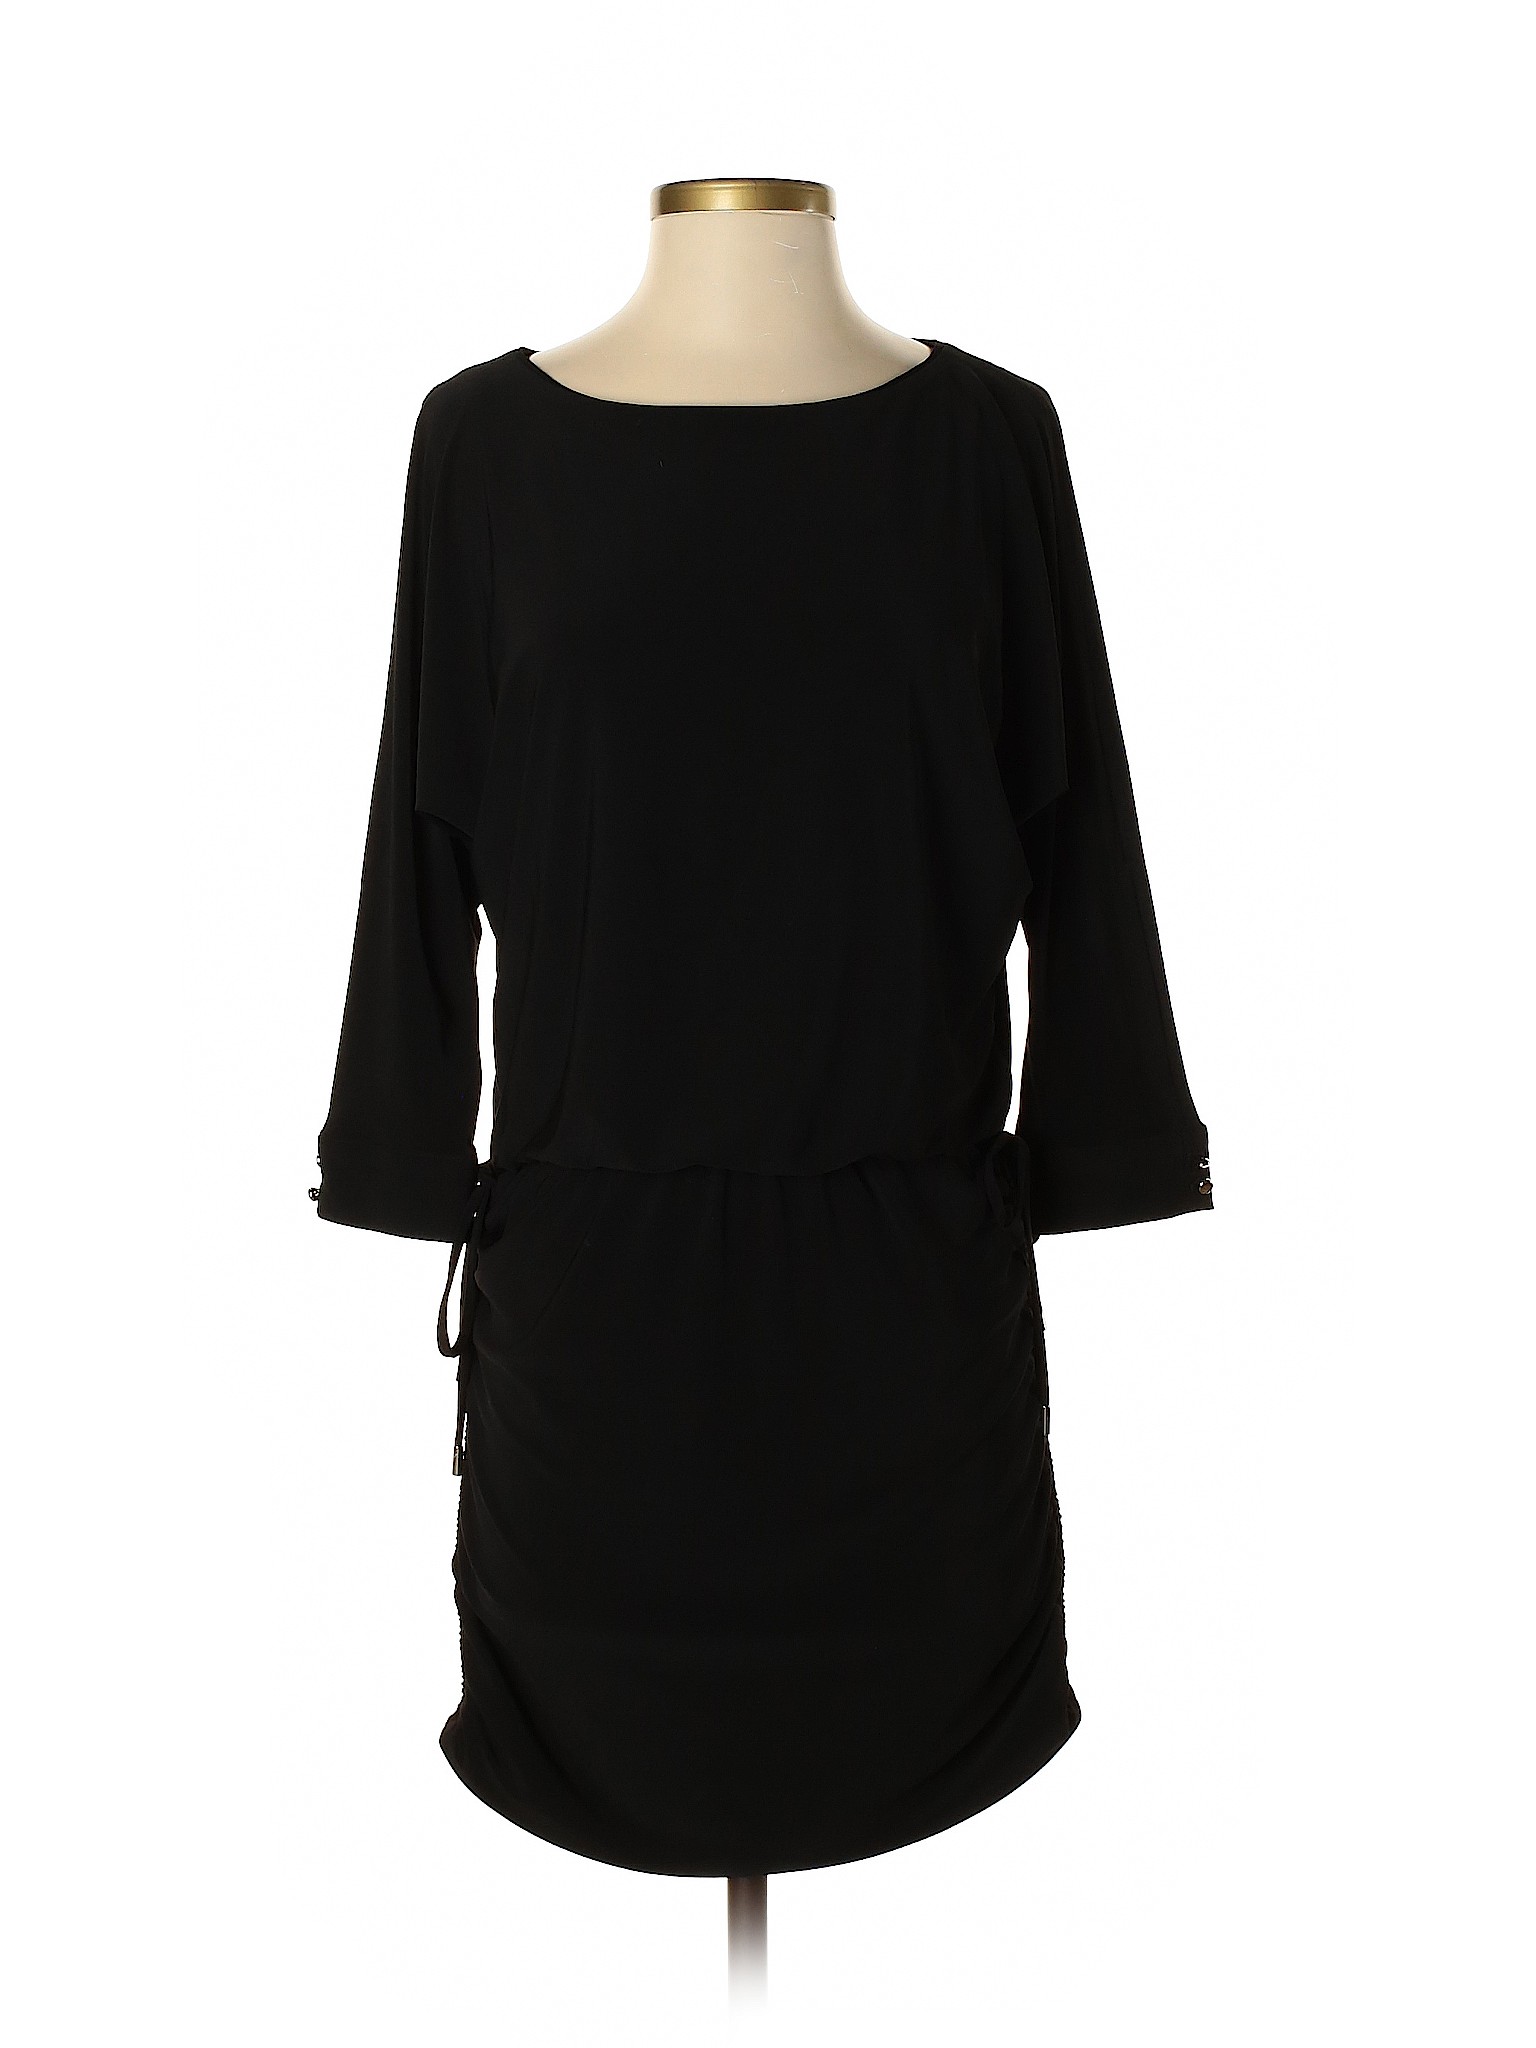 White House Black Market Women Black Casual Dress XS | eBay